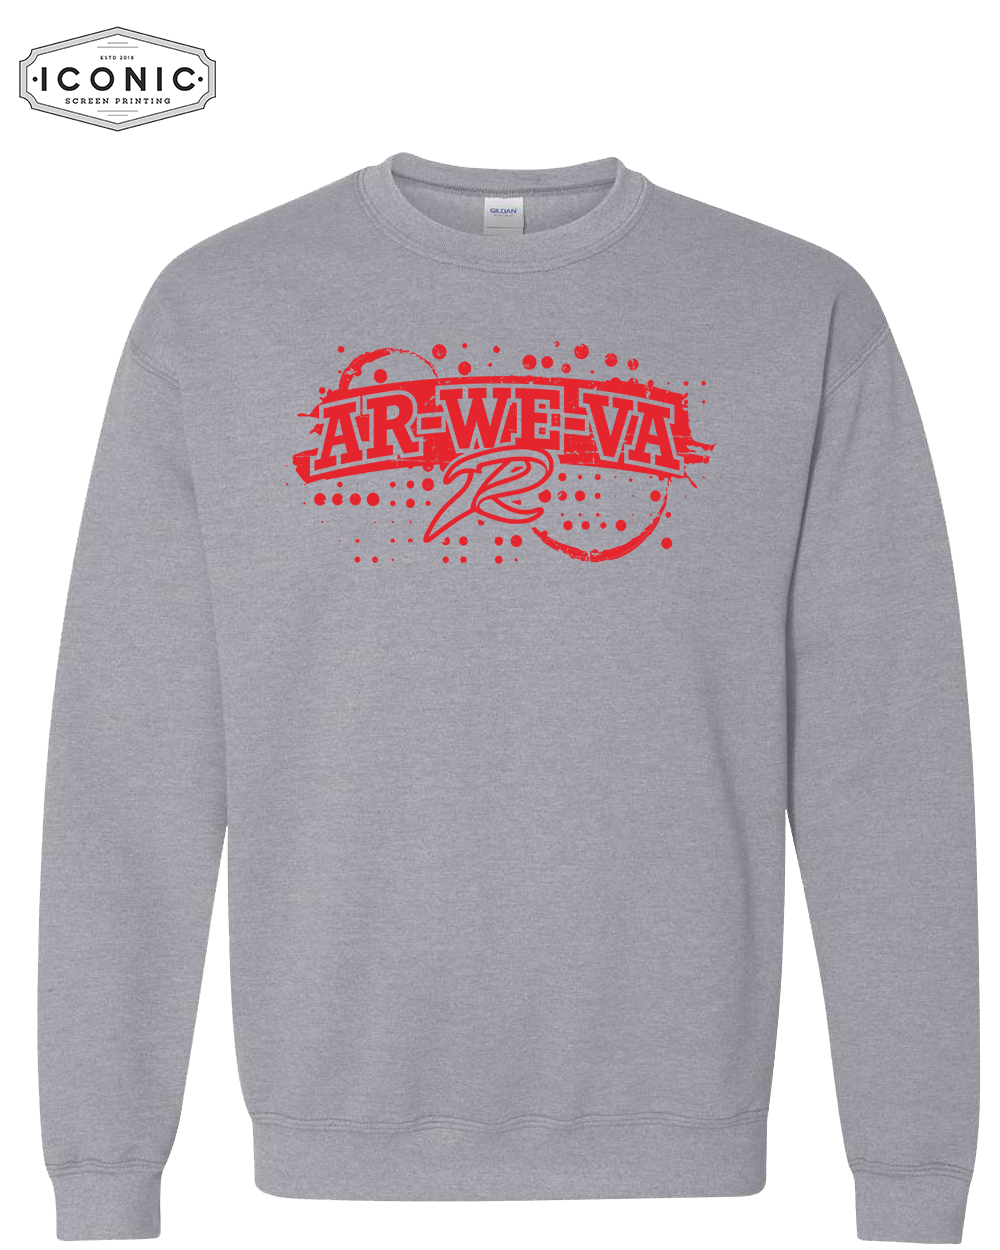 Ar-We-Va Rockets - Heavy Crewneck Sweatshirt